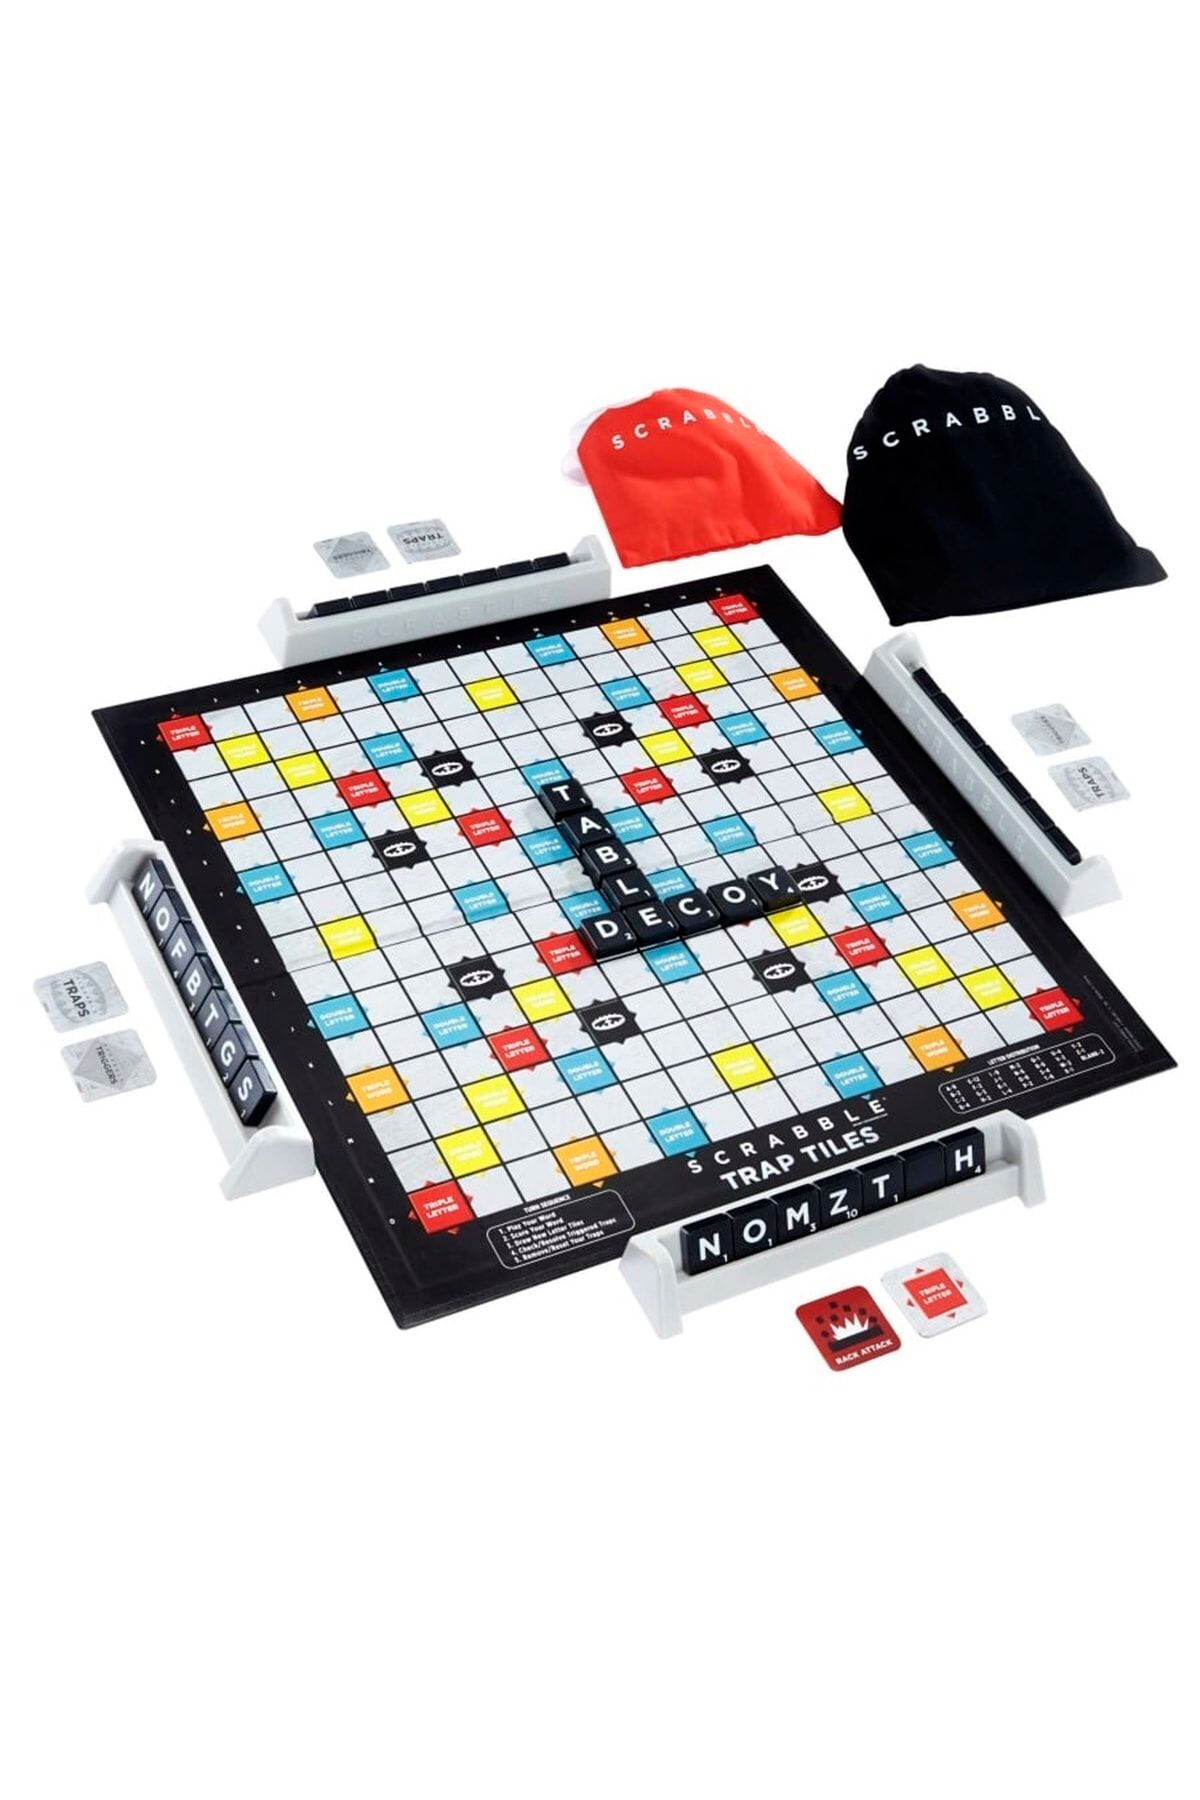 Scrabble Trap Tiles Kutu Oyunu